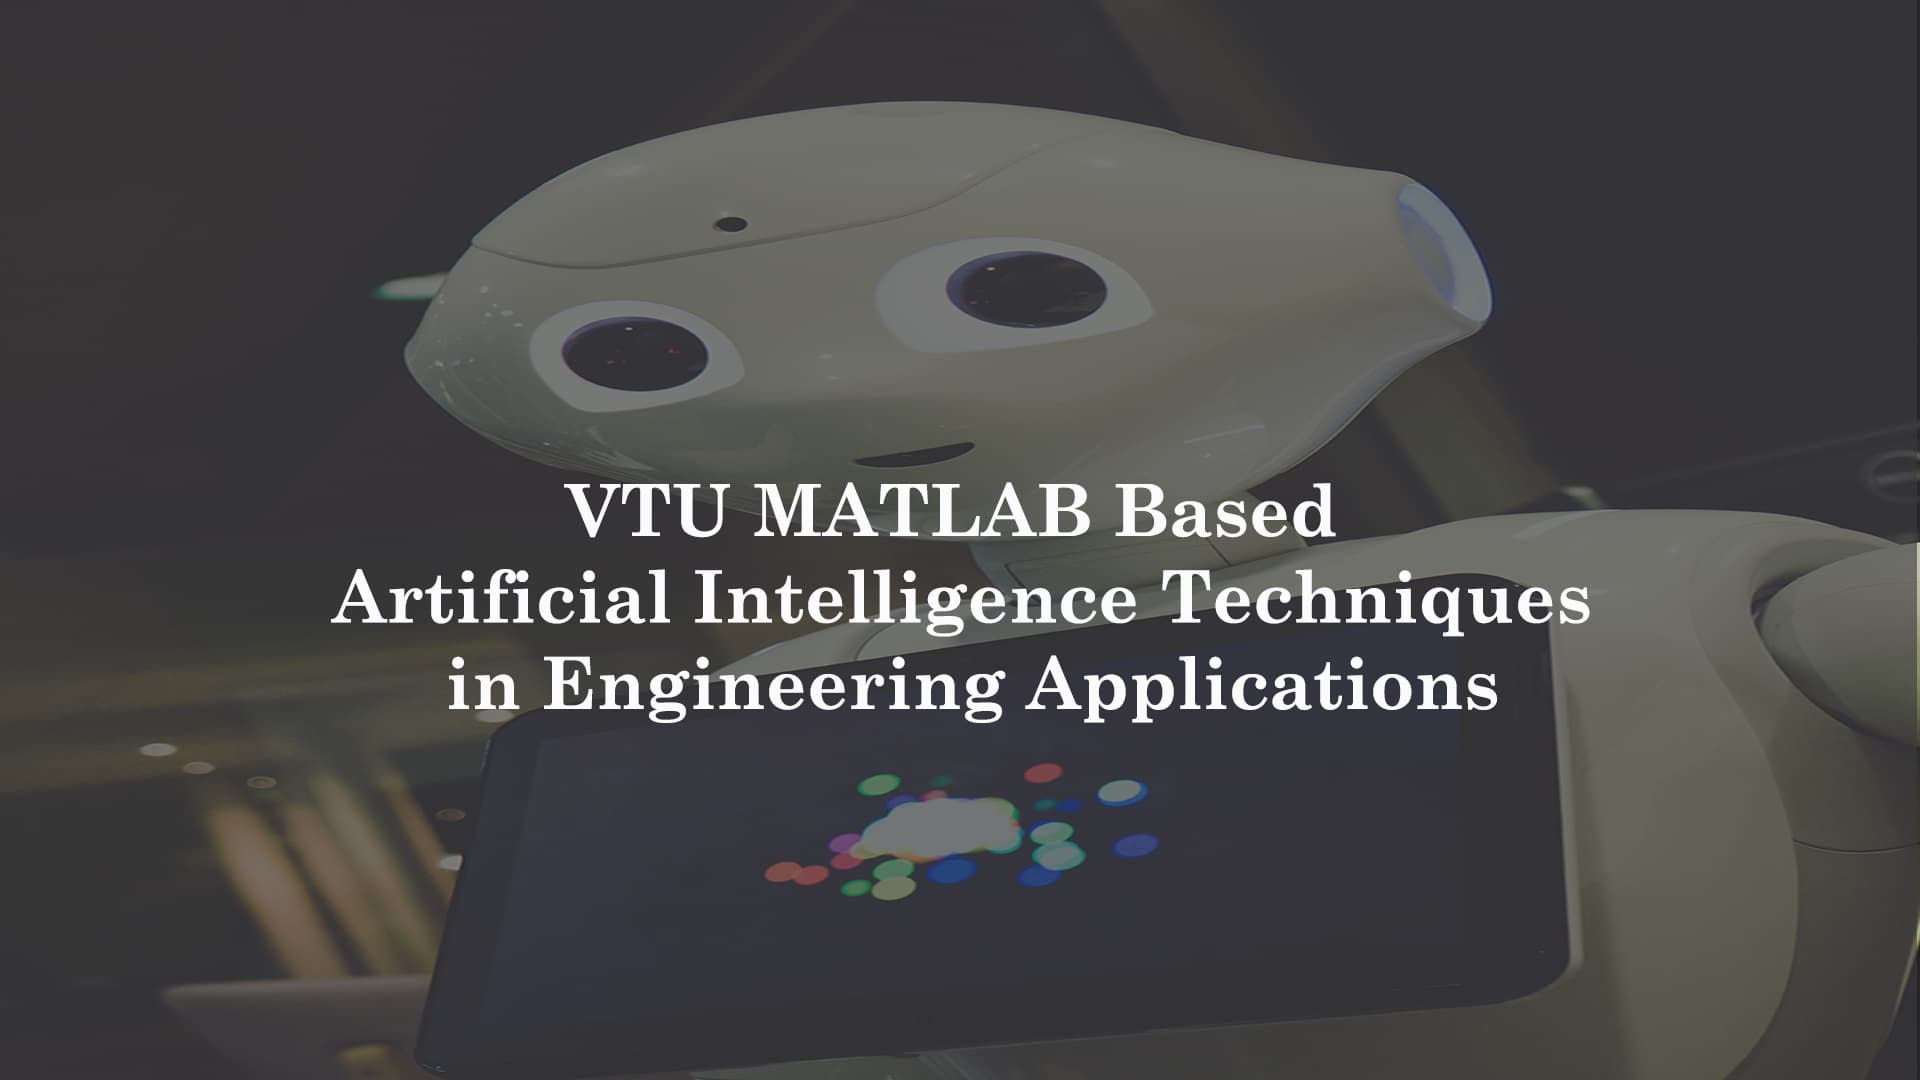 VTU MATLAB Based Artificial Intelligence Techniques